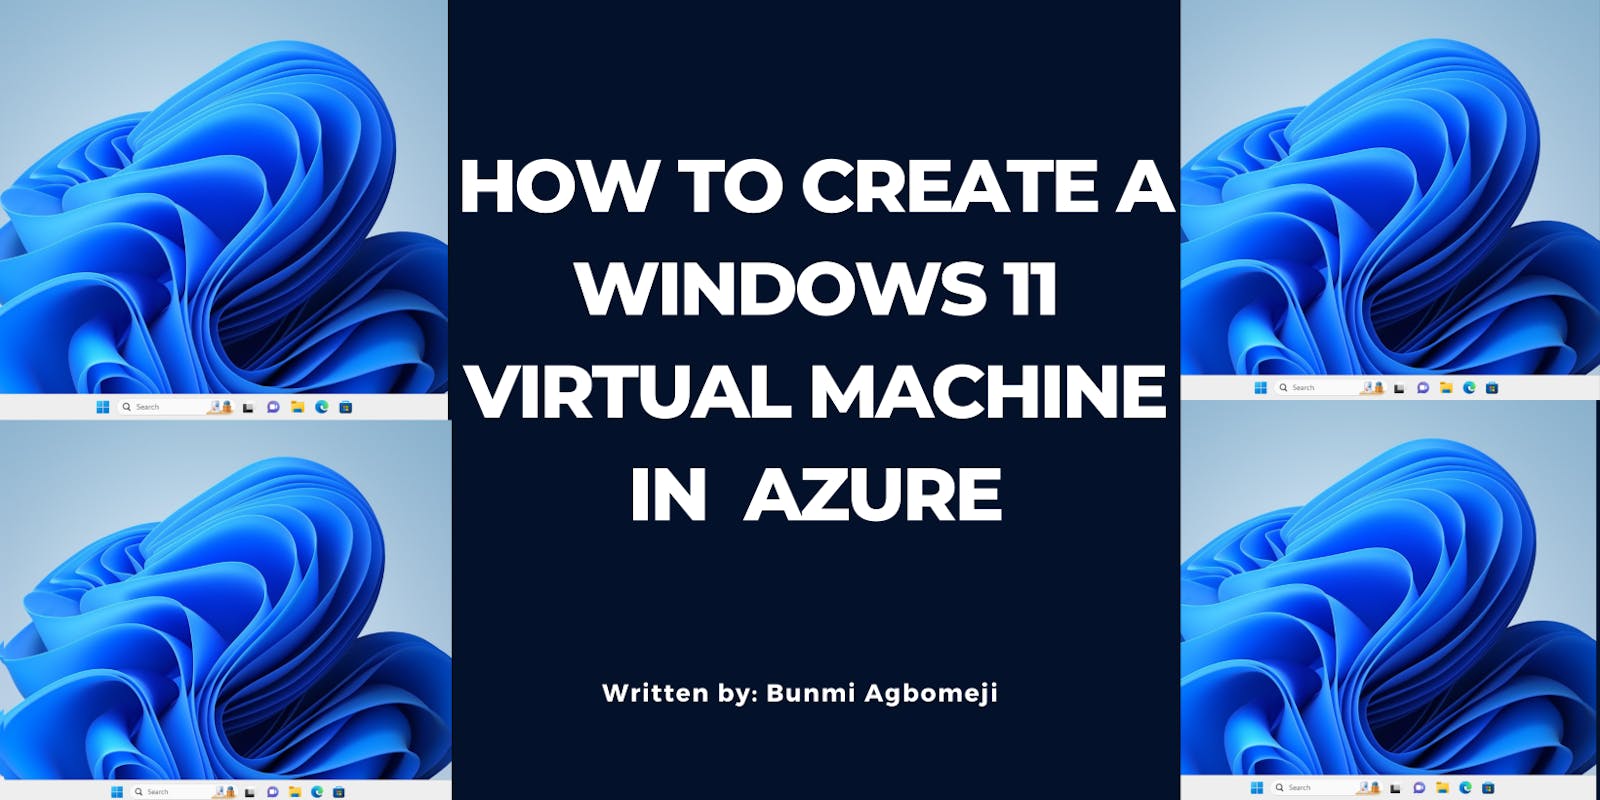 How To Create a Windows 11 Virtual Machine